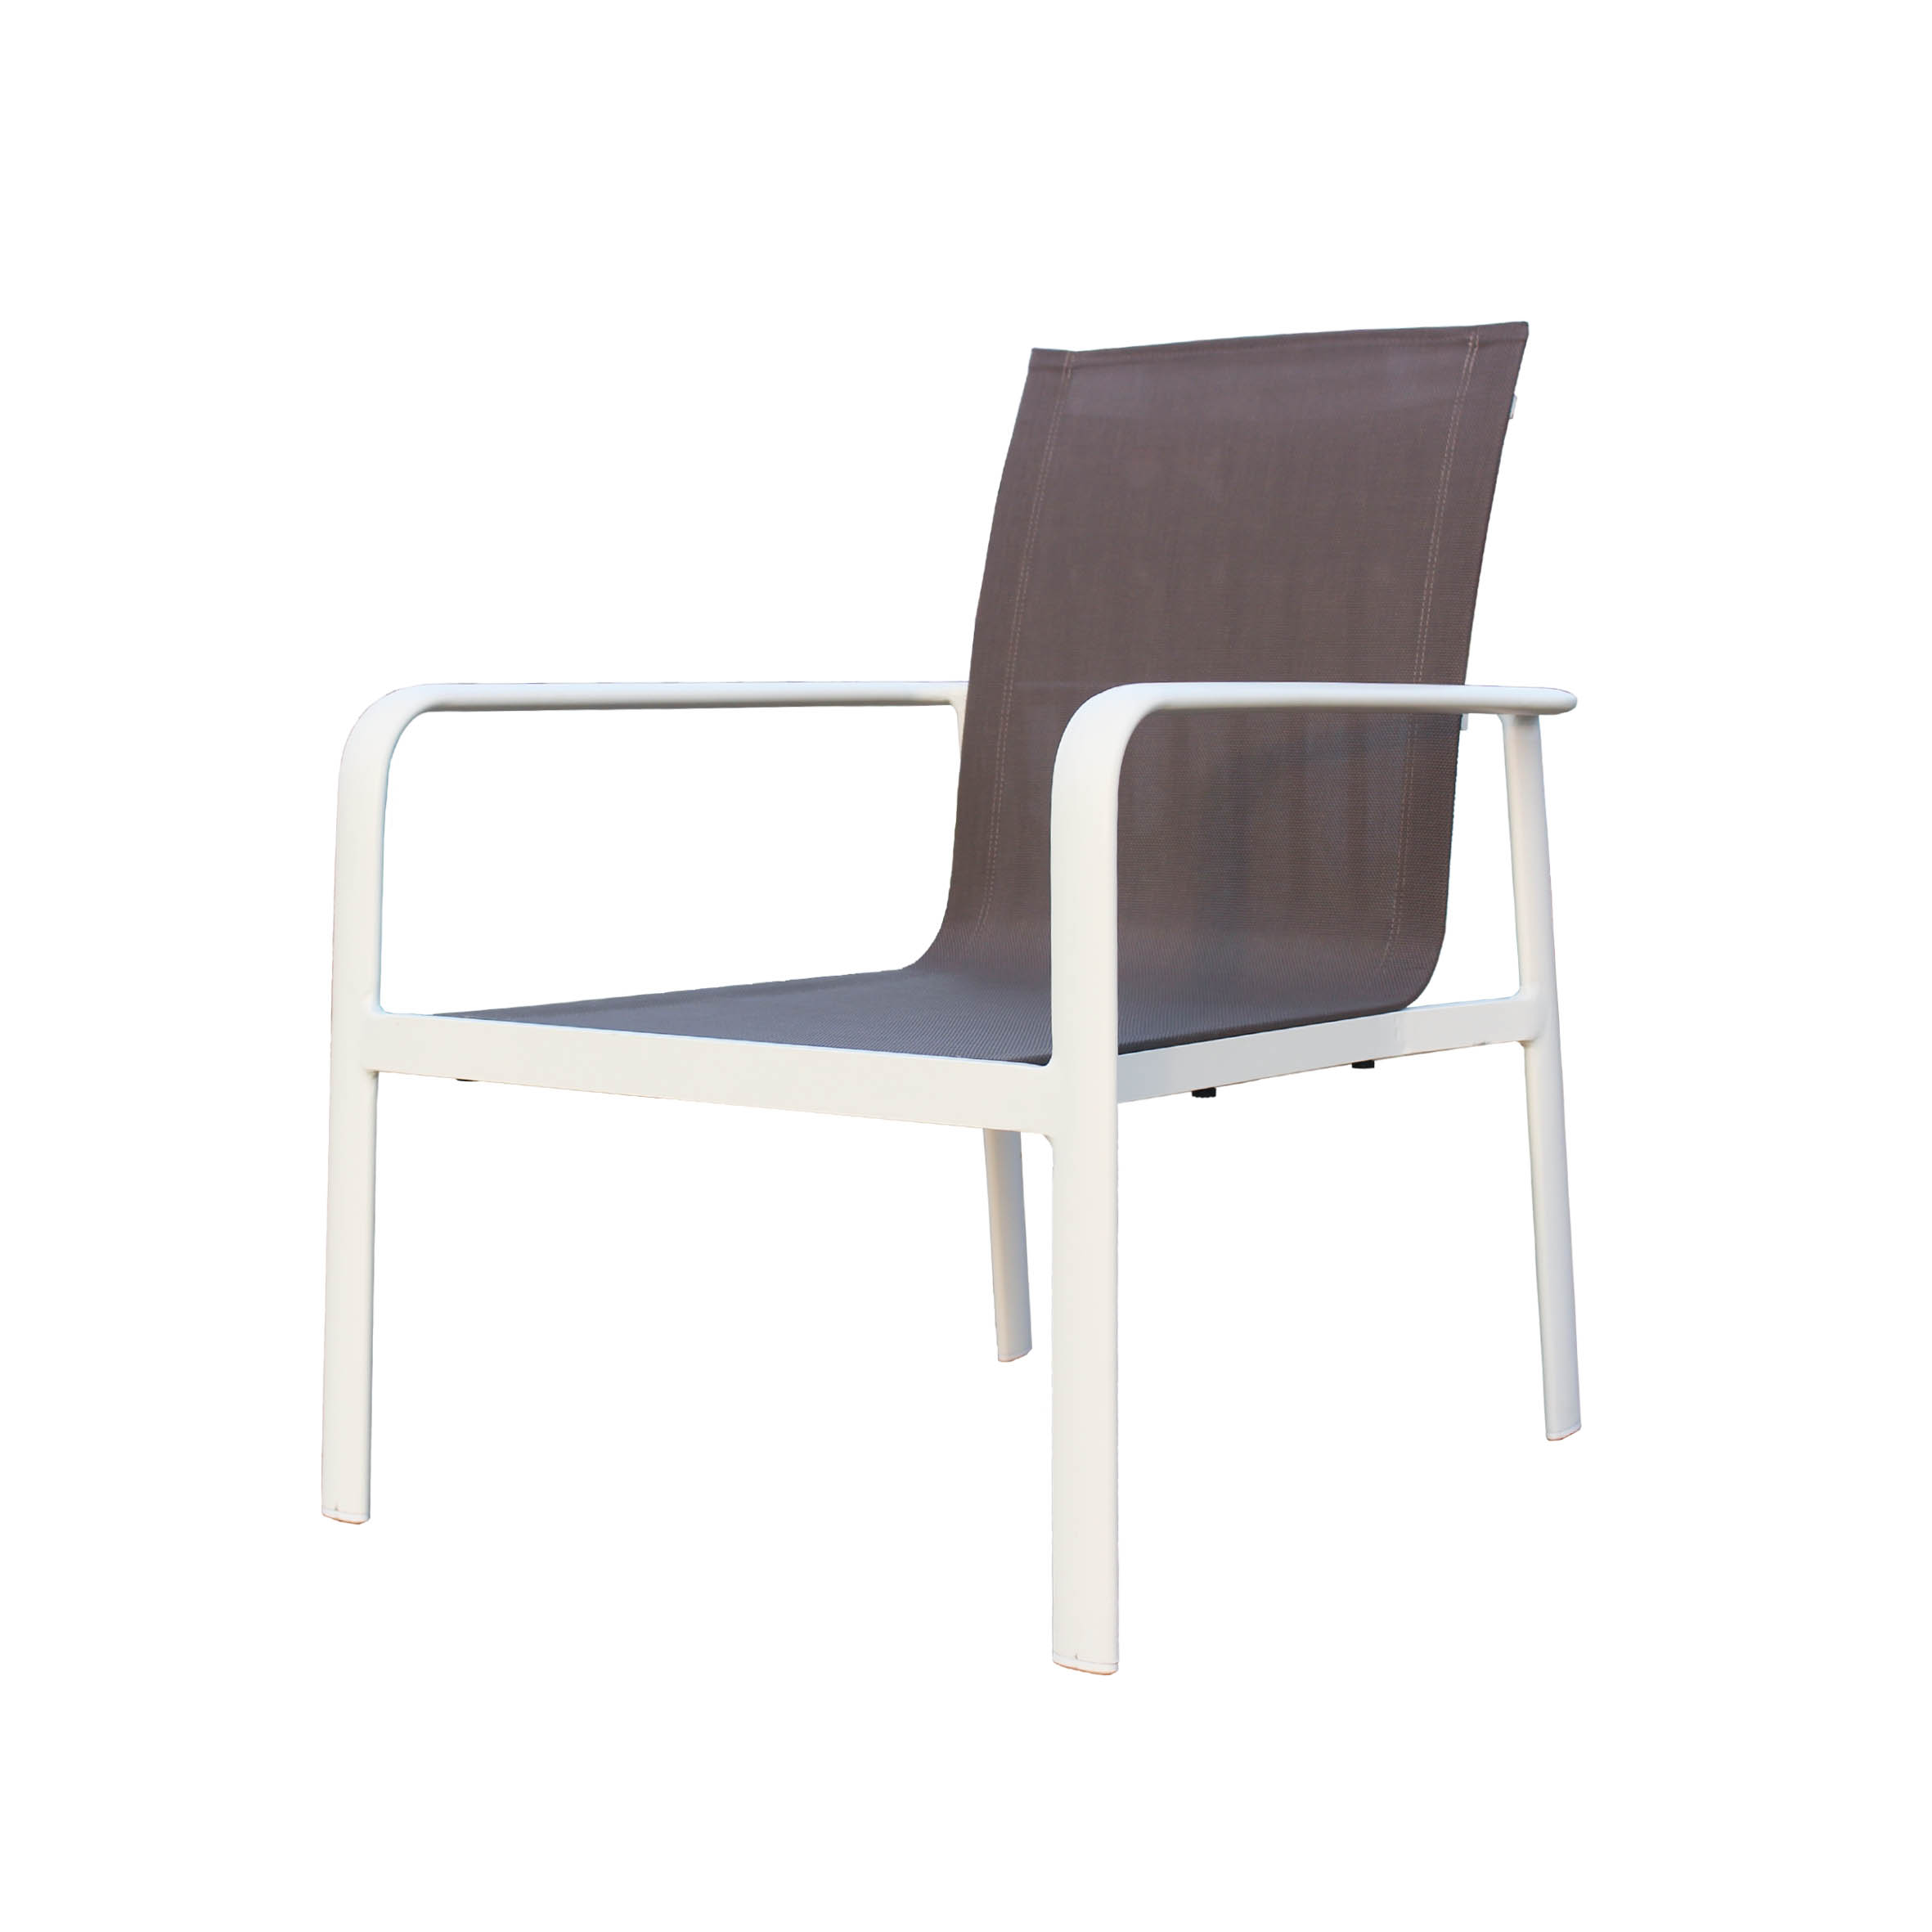 Moon textile leisure chair S2